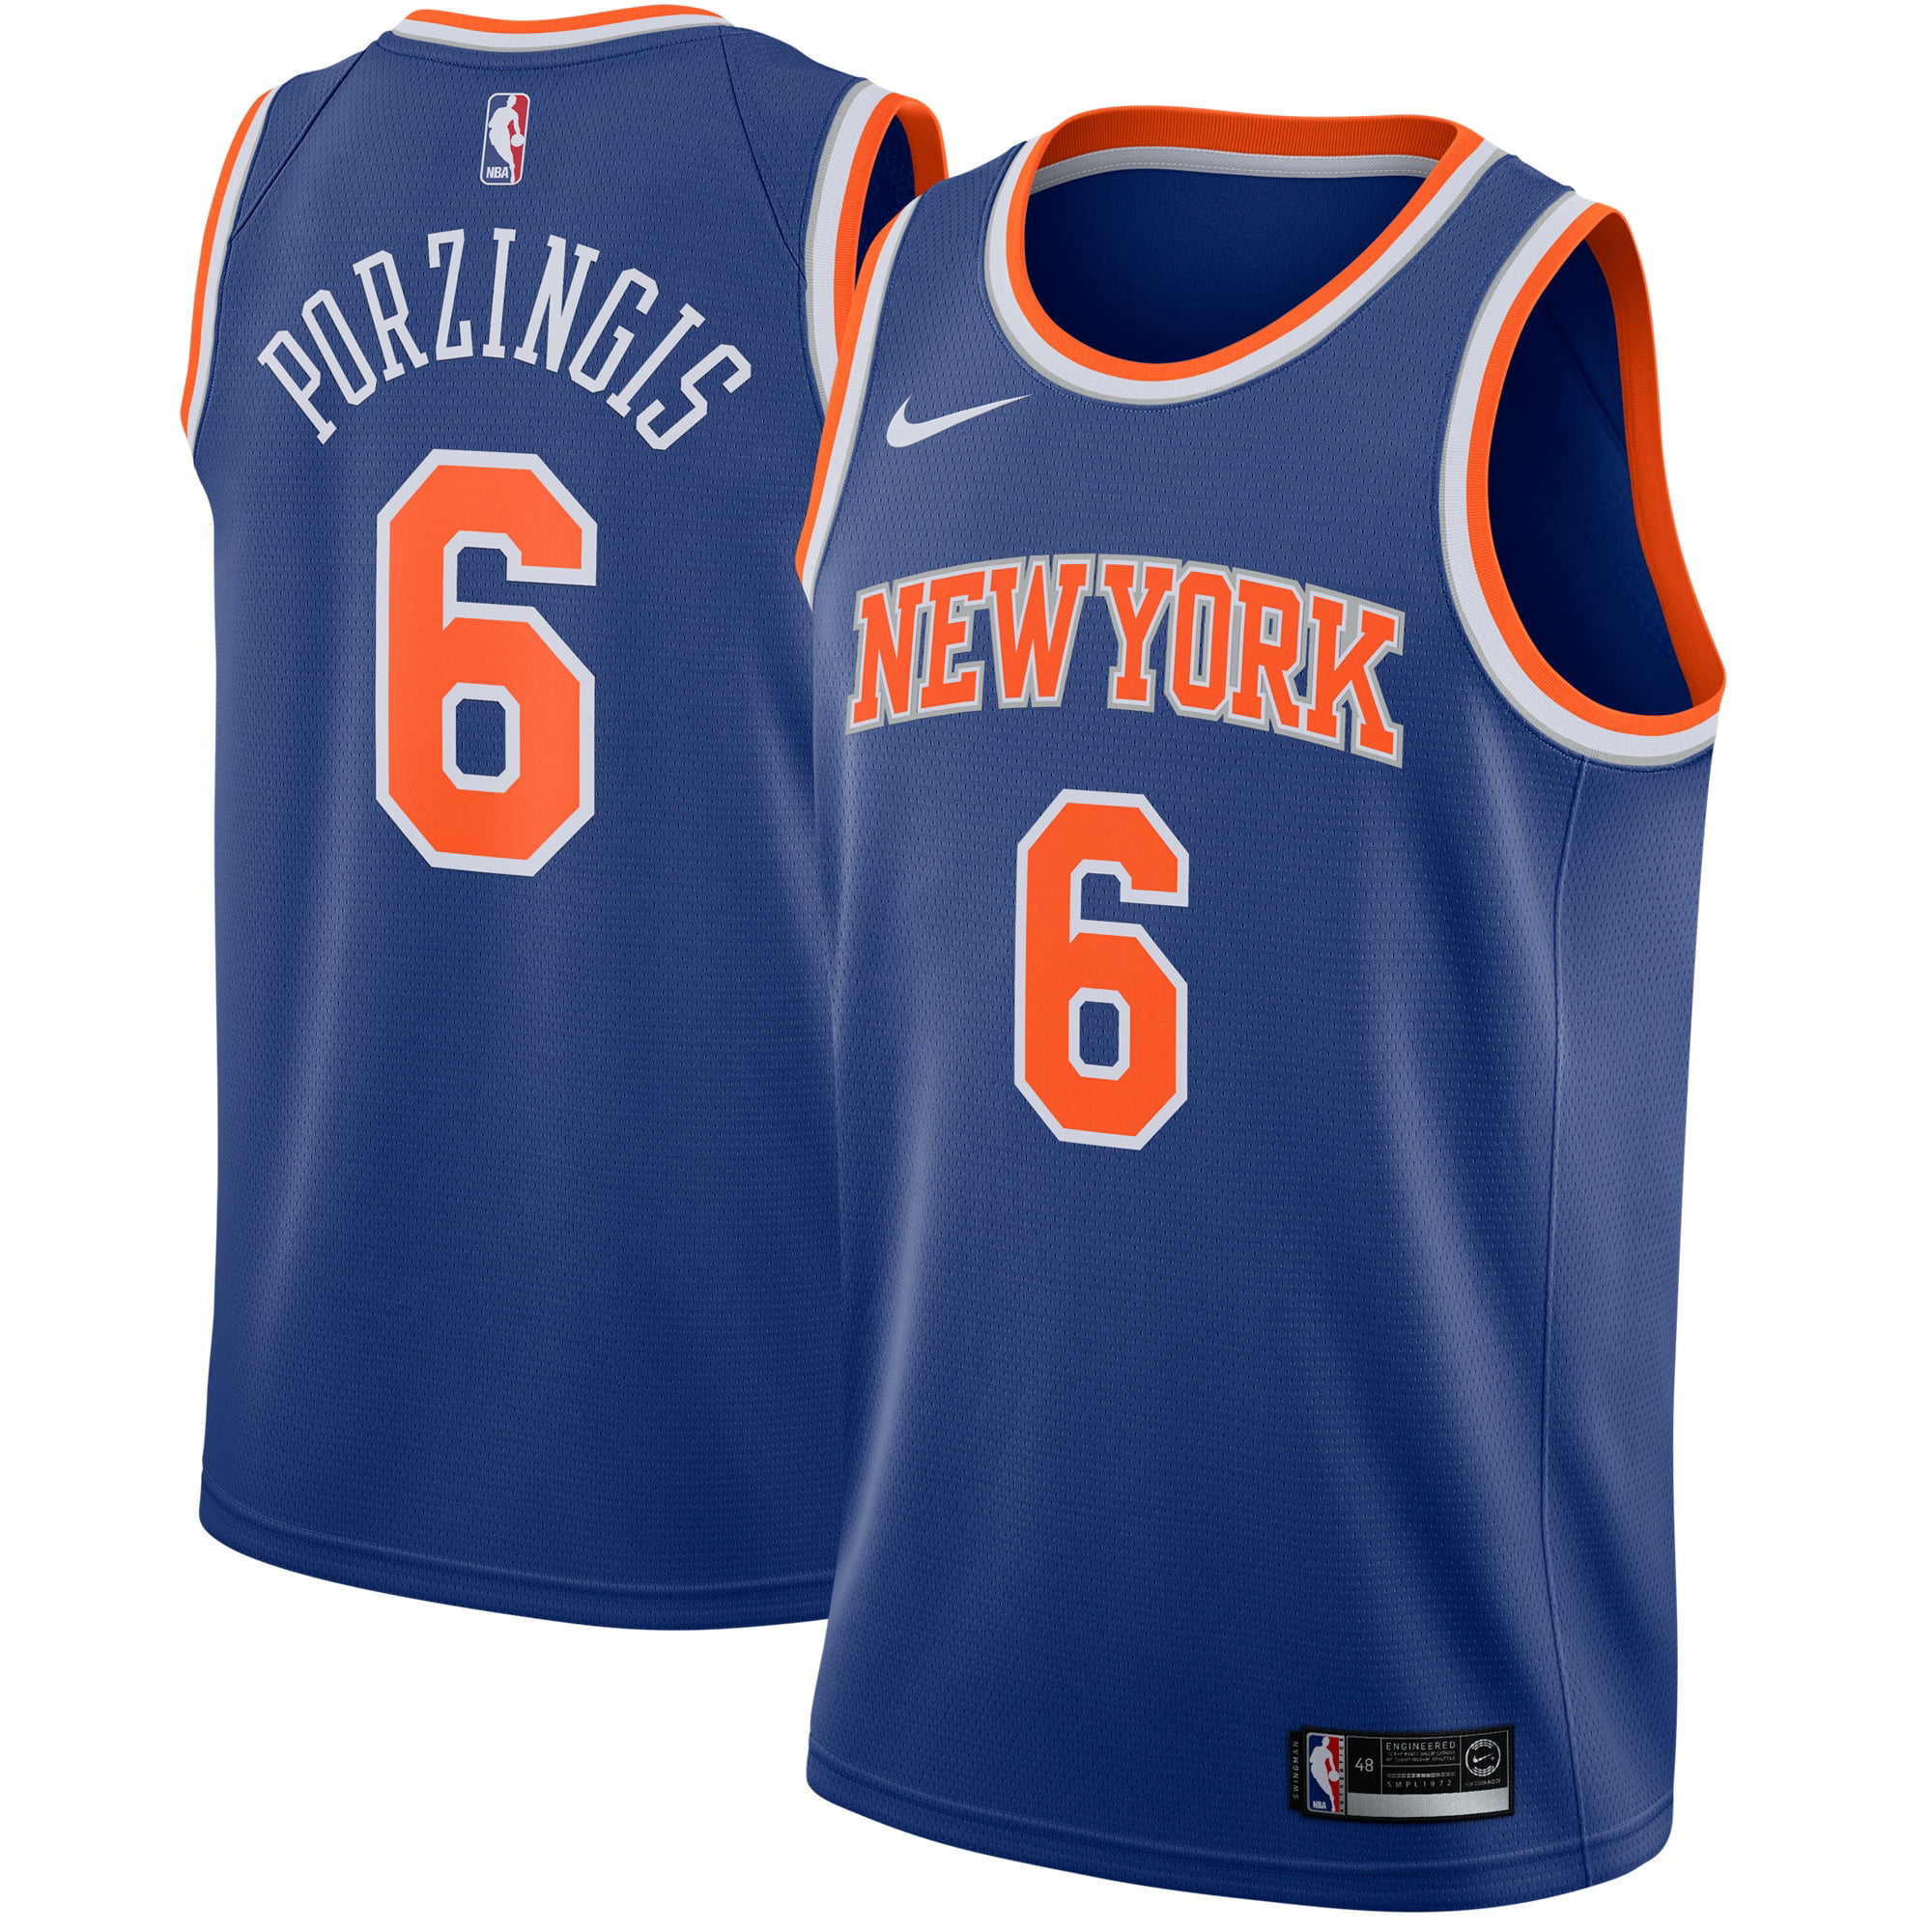 adidas, Shirts, New York Knicks Porzingis Jersey